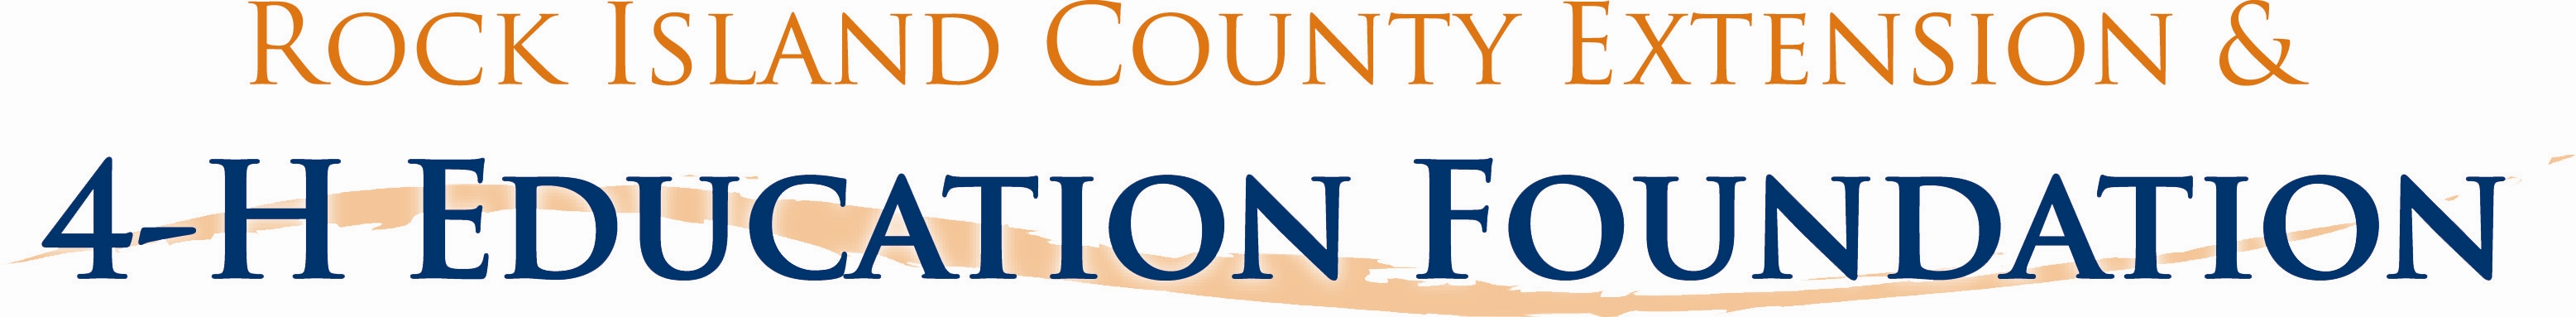 Rock Island County Extension & 4-H Education Foundation logo